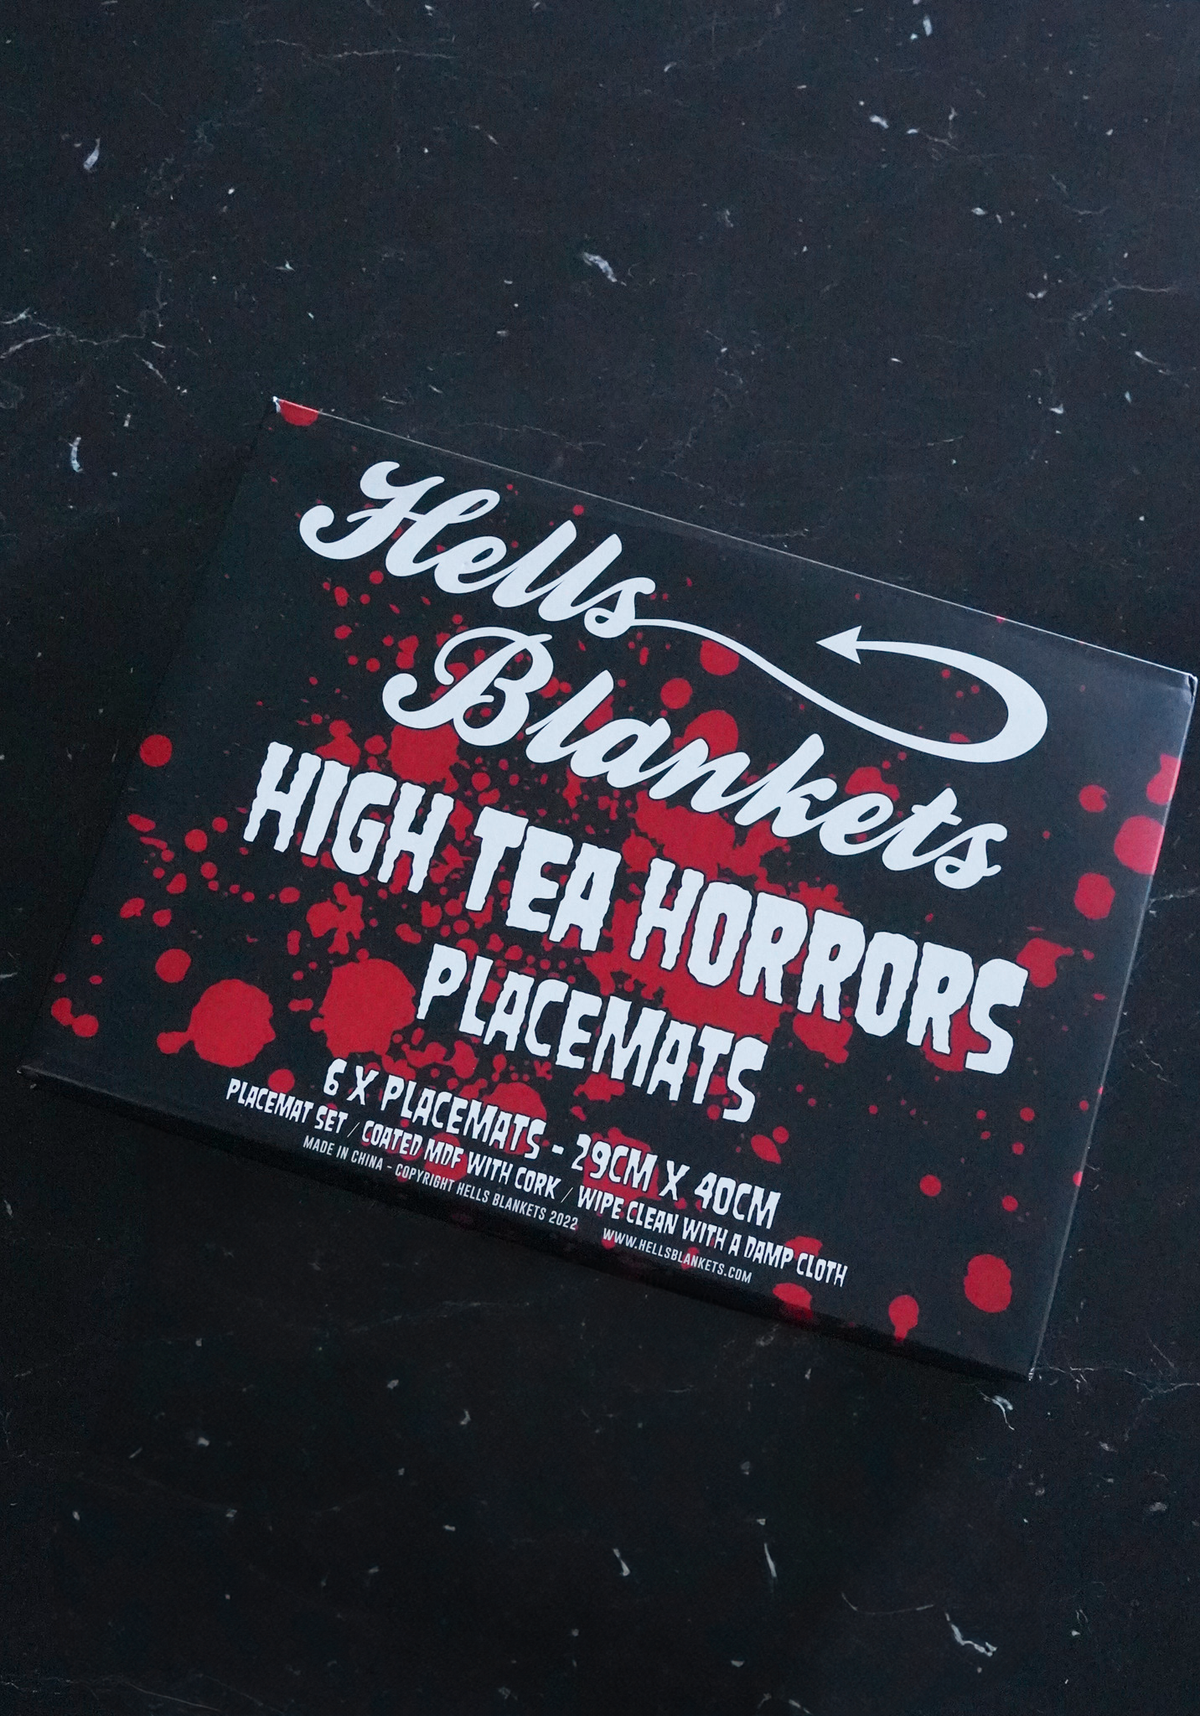 High Tea Horrors | PLACEMAT SET